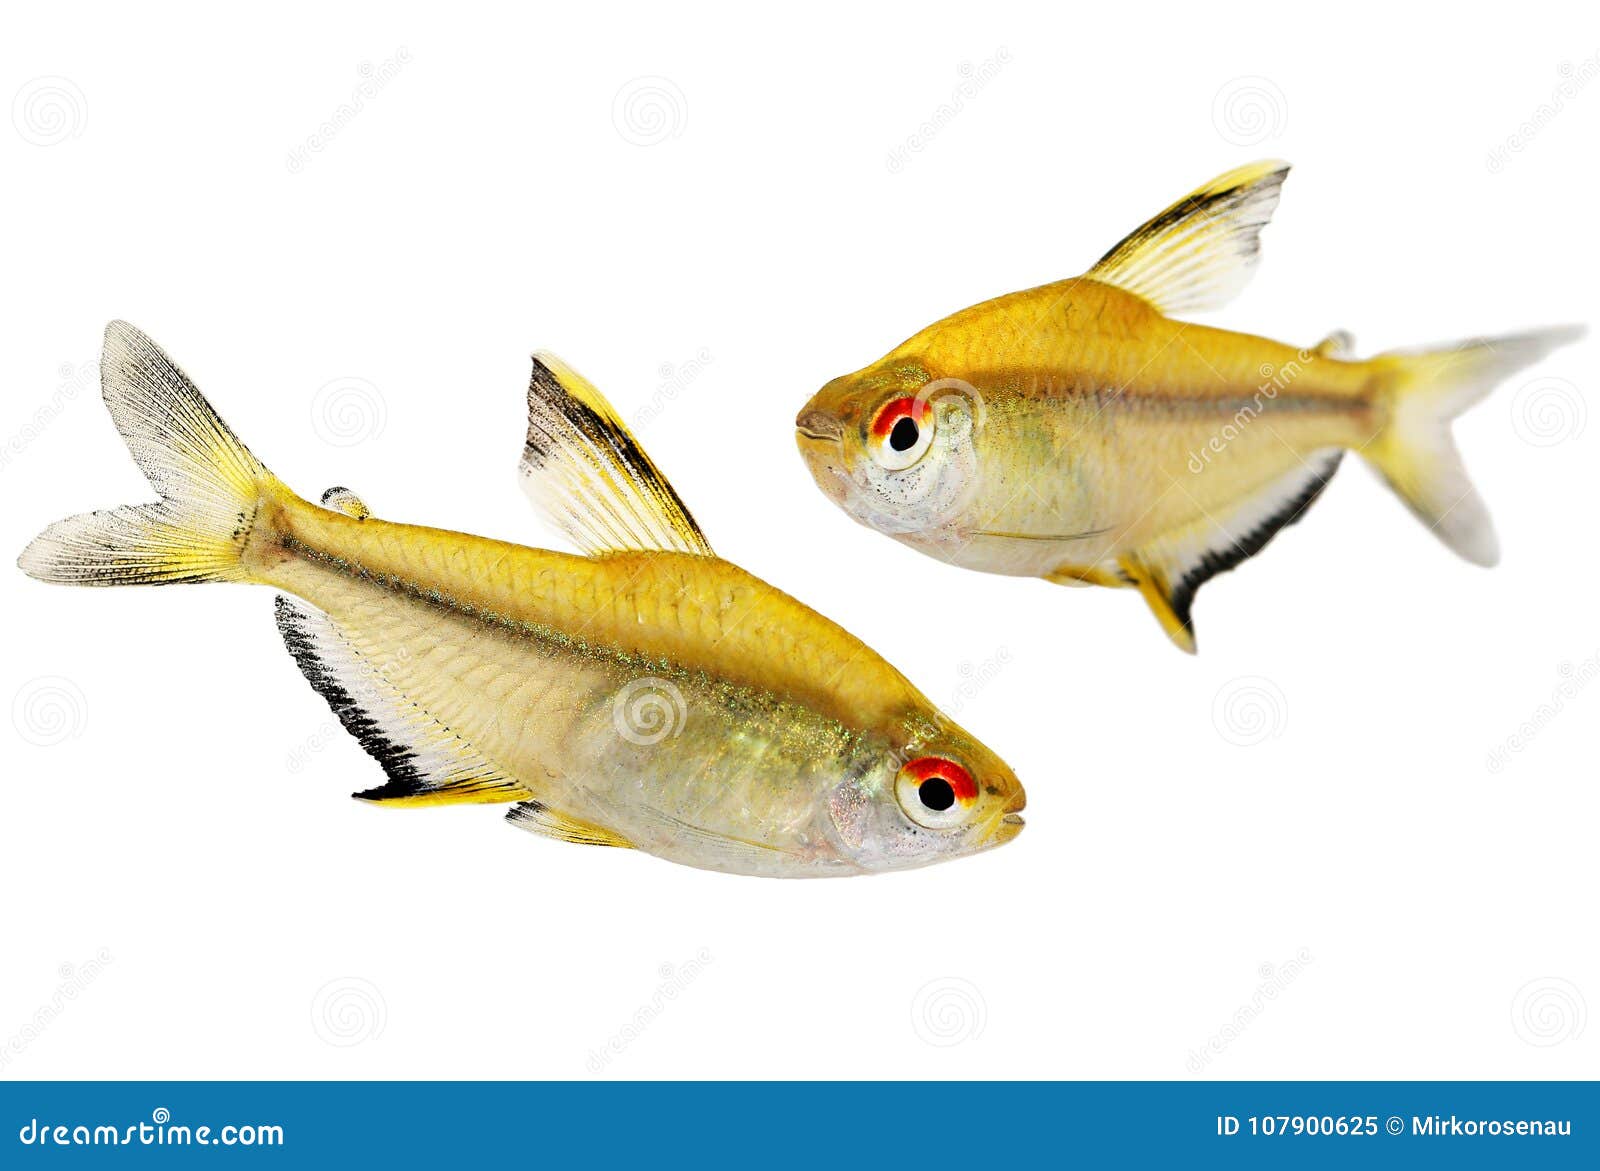 lemon tetra hyphessobrycon pulchripinnis tropical freshwater aquarium fish